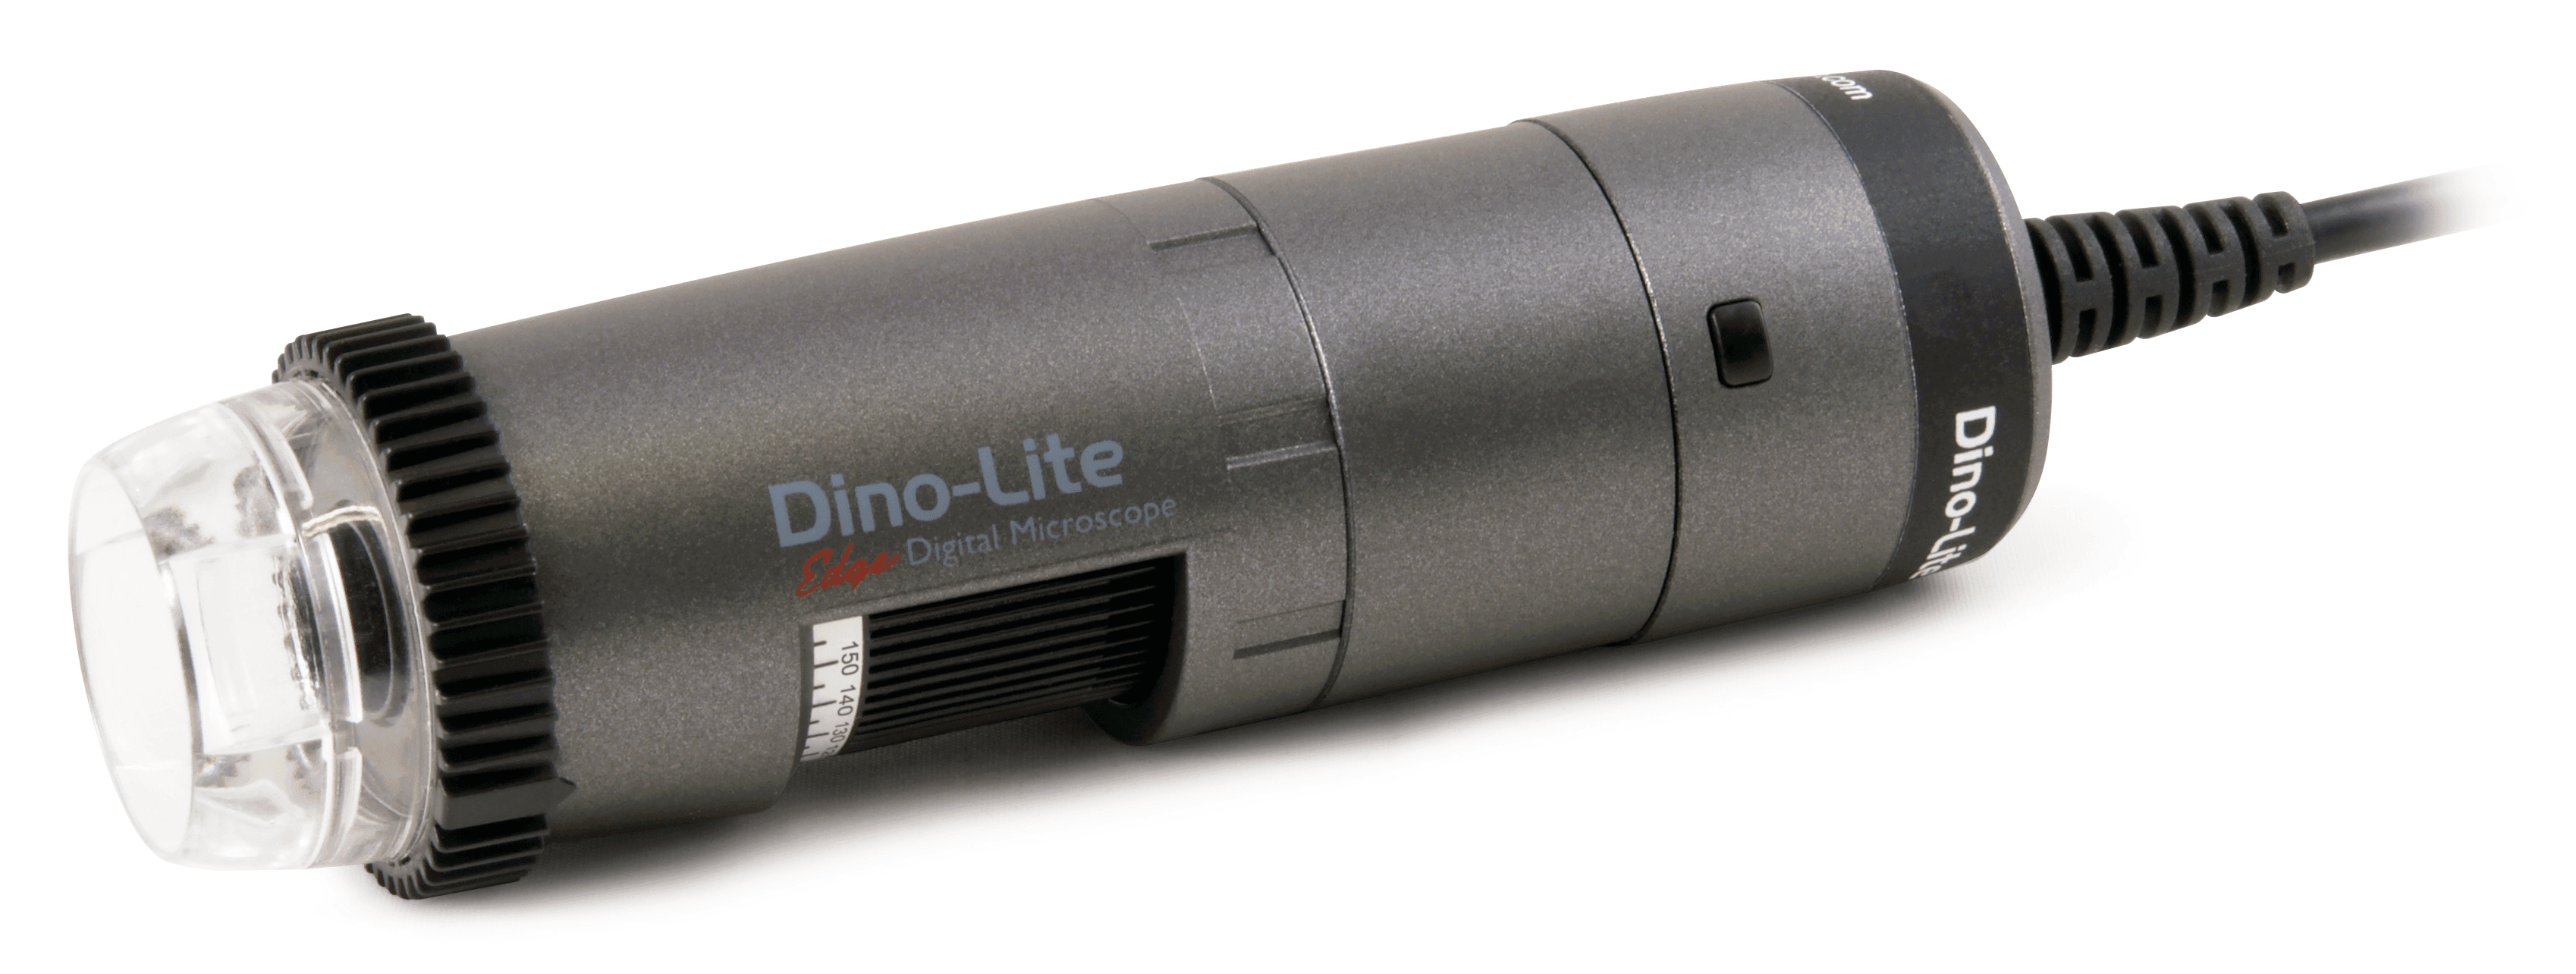 Dino-Lite AF4115ZT Edge digital microscope USB - Universal1.3MP, 20~230x, polarizer, FLC